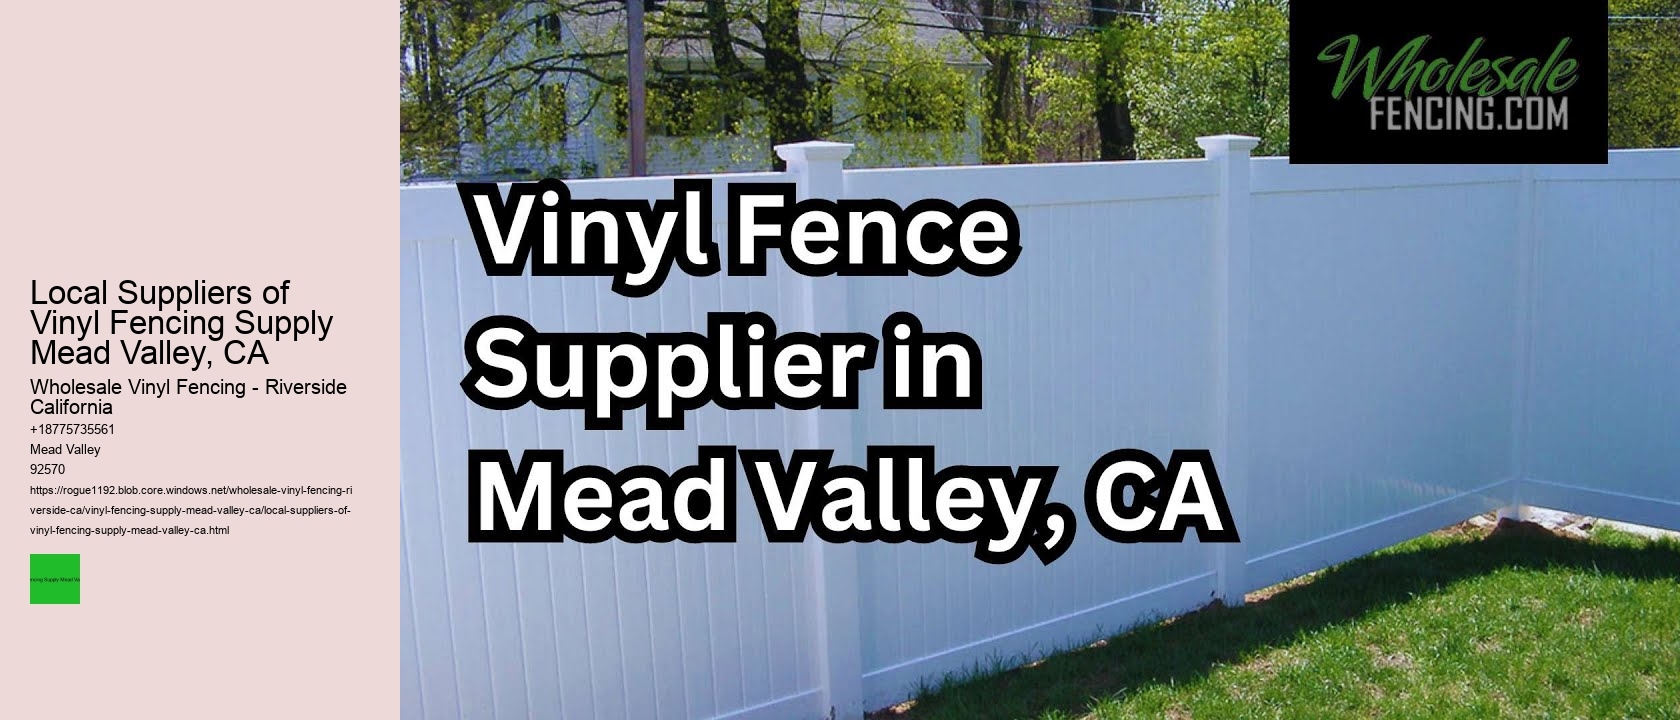 Local Suppliers of Vinyl Fencing Supply Mead Valley, CA